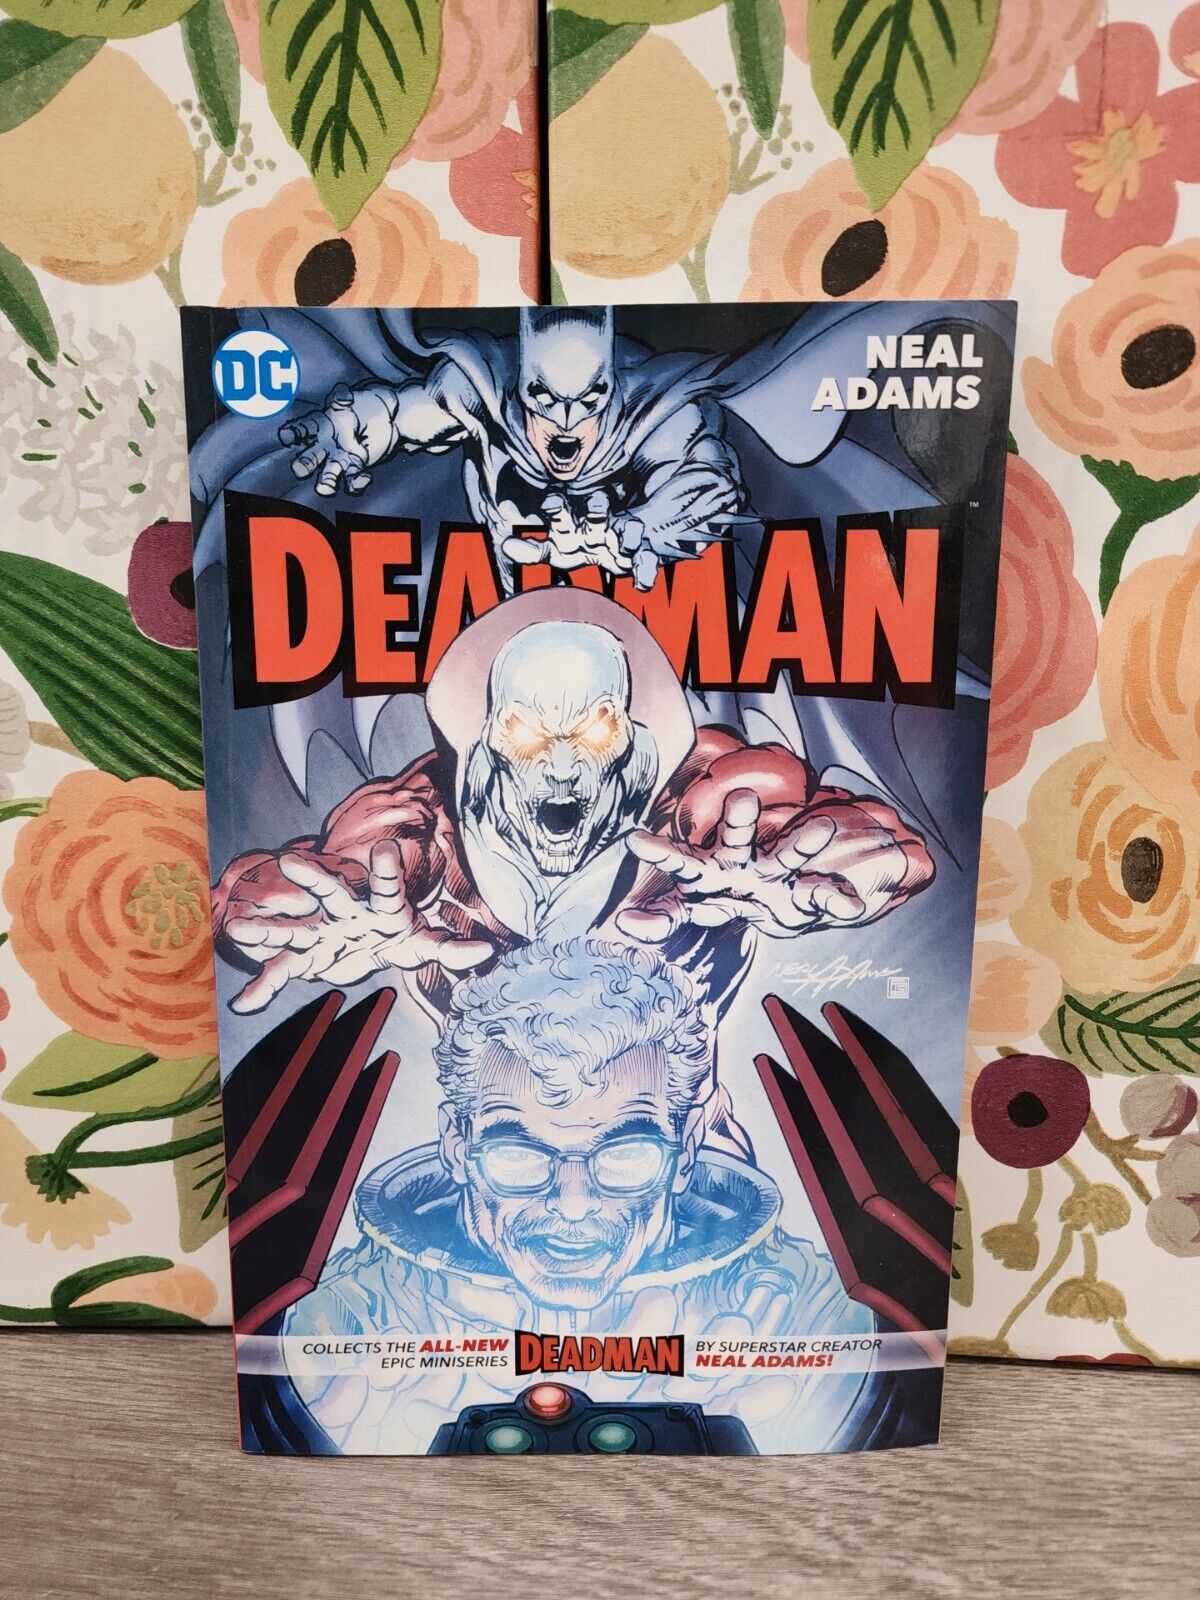 DC Comics Deadman (2018, Paperback) By Neal Adams - New